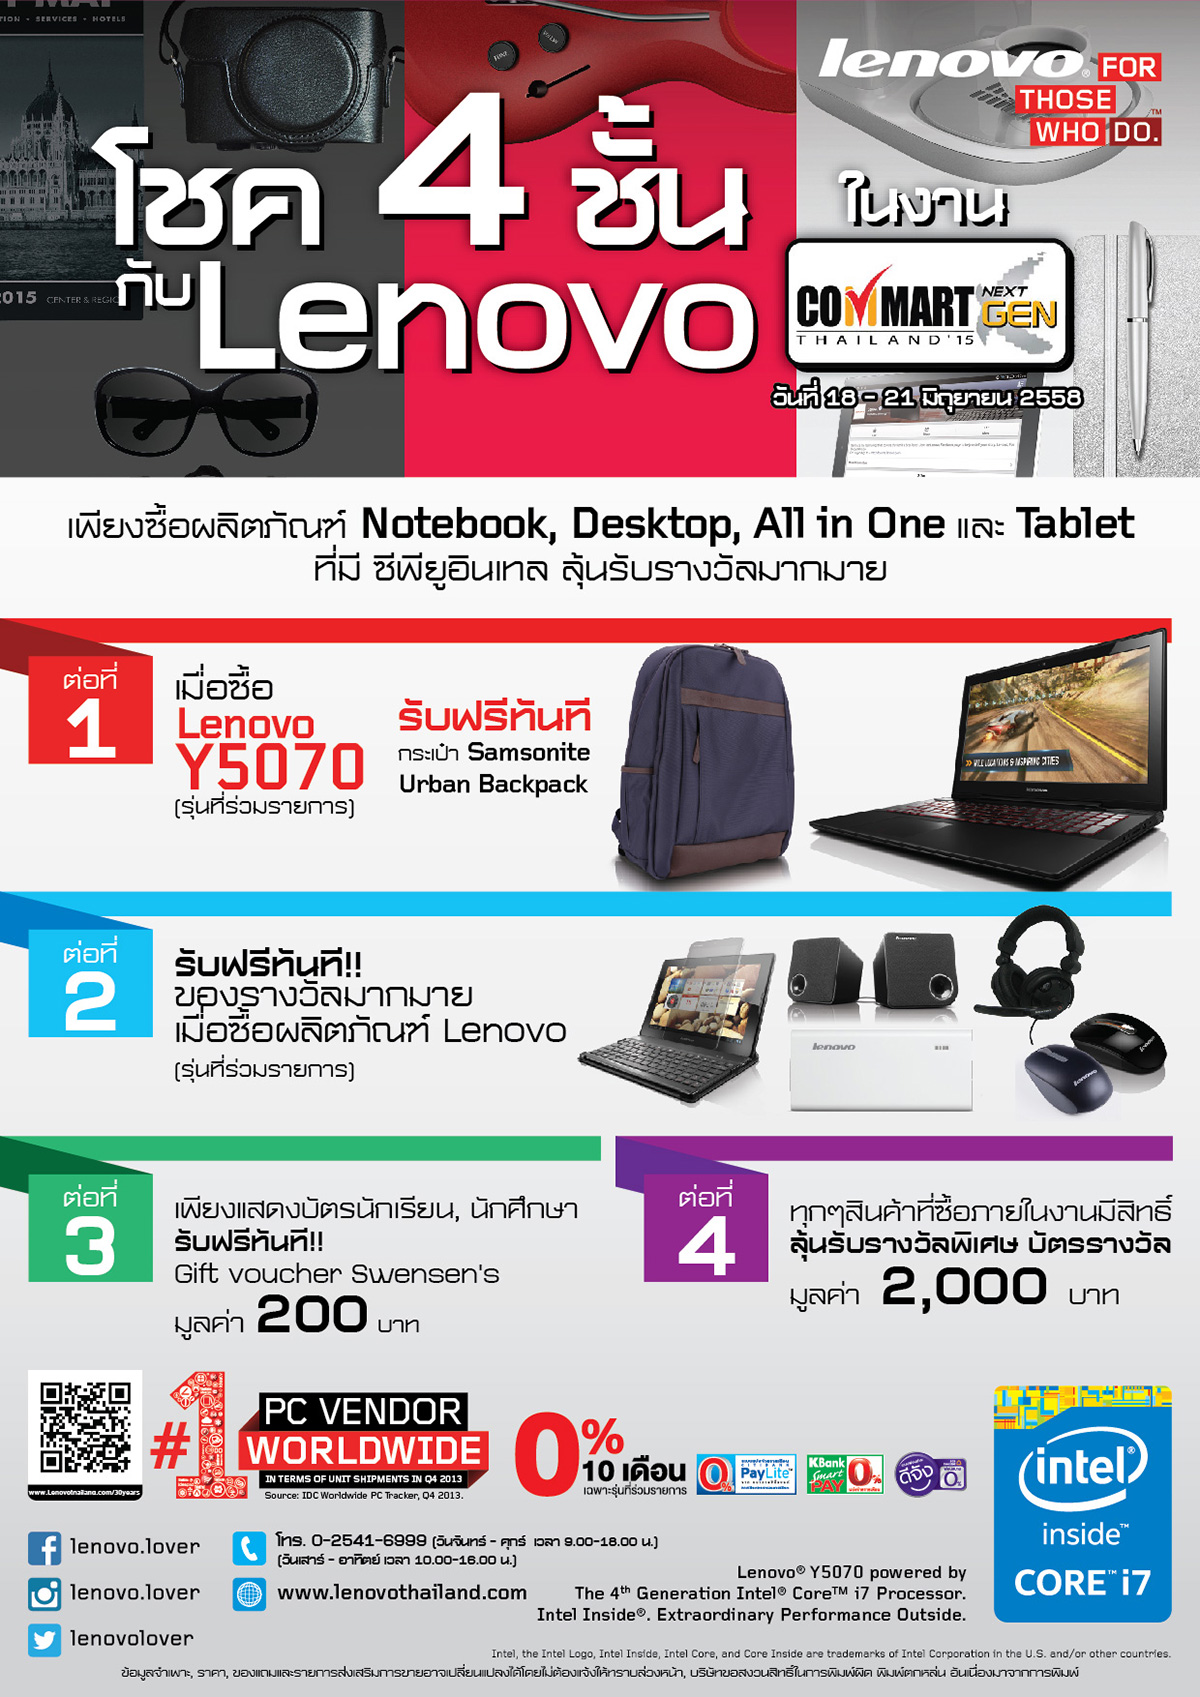 Lenovo-Commart-NextGen-promotion-1